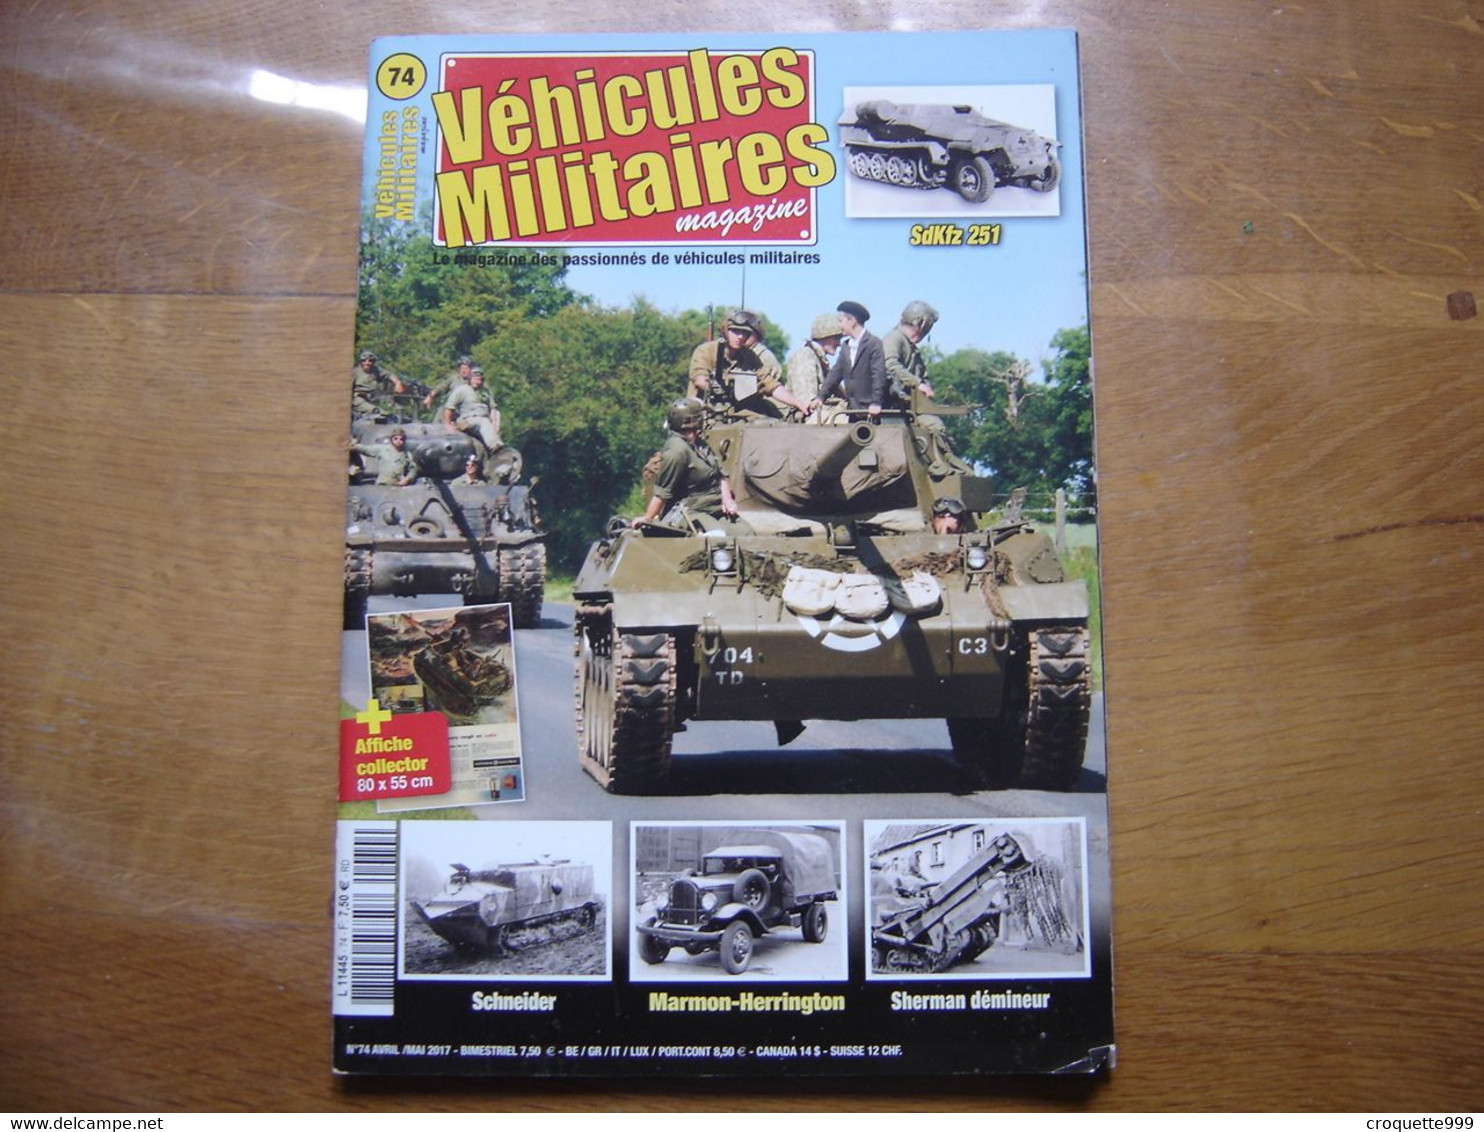 VEHICULES MILITAIRES MAGAZINE 74 Materiel Armee Sommaire En Photo AFFICHE POSTER - Armes